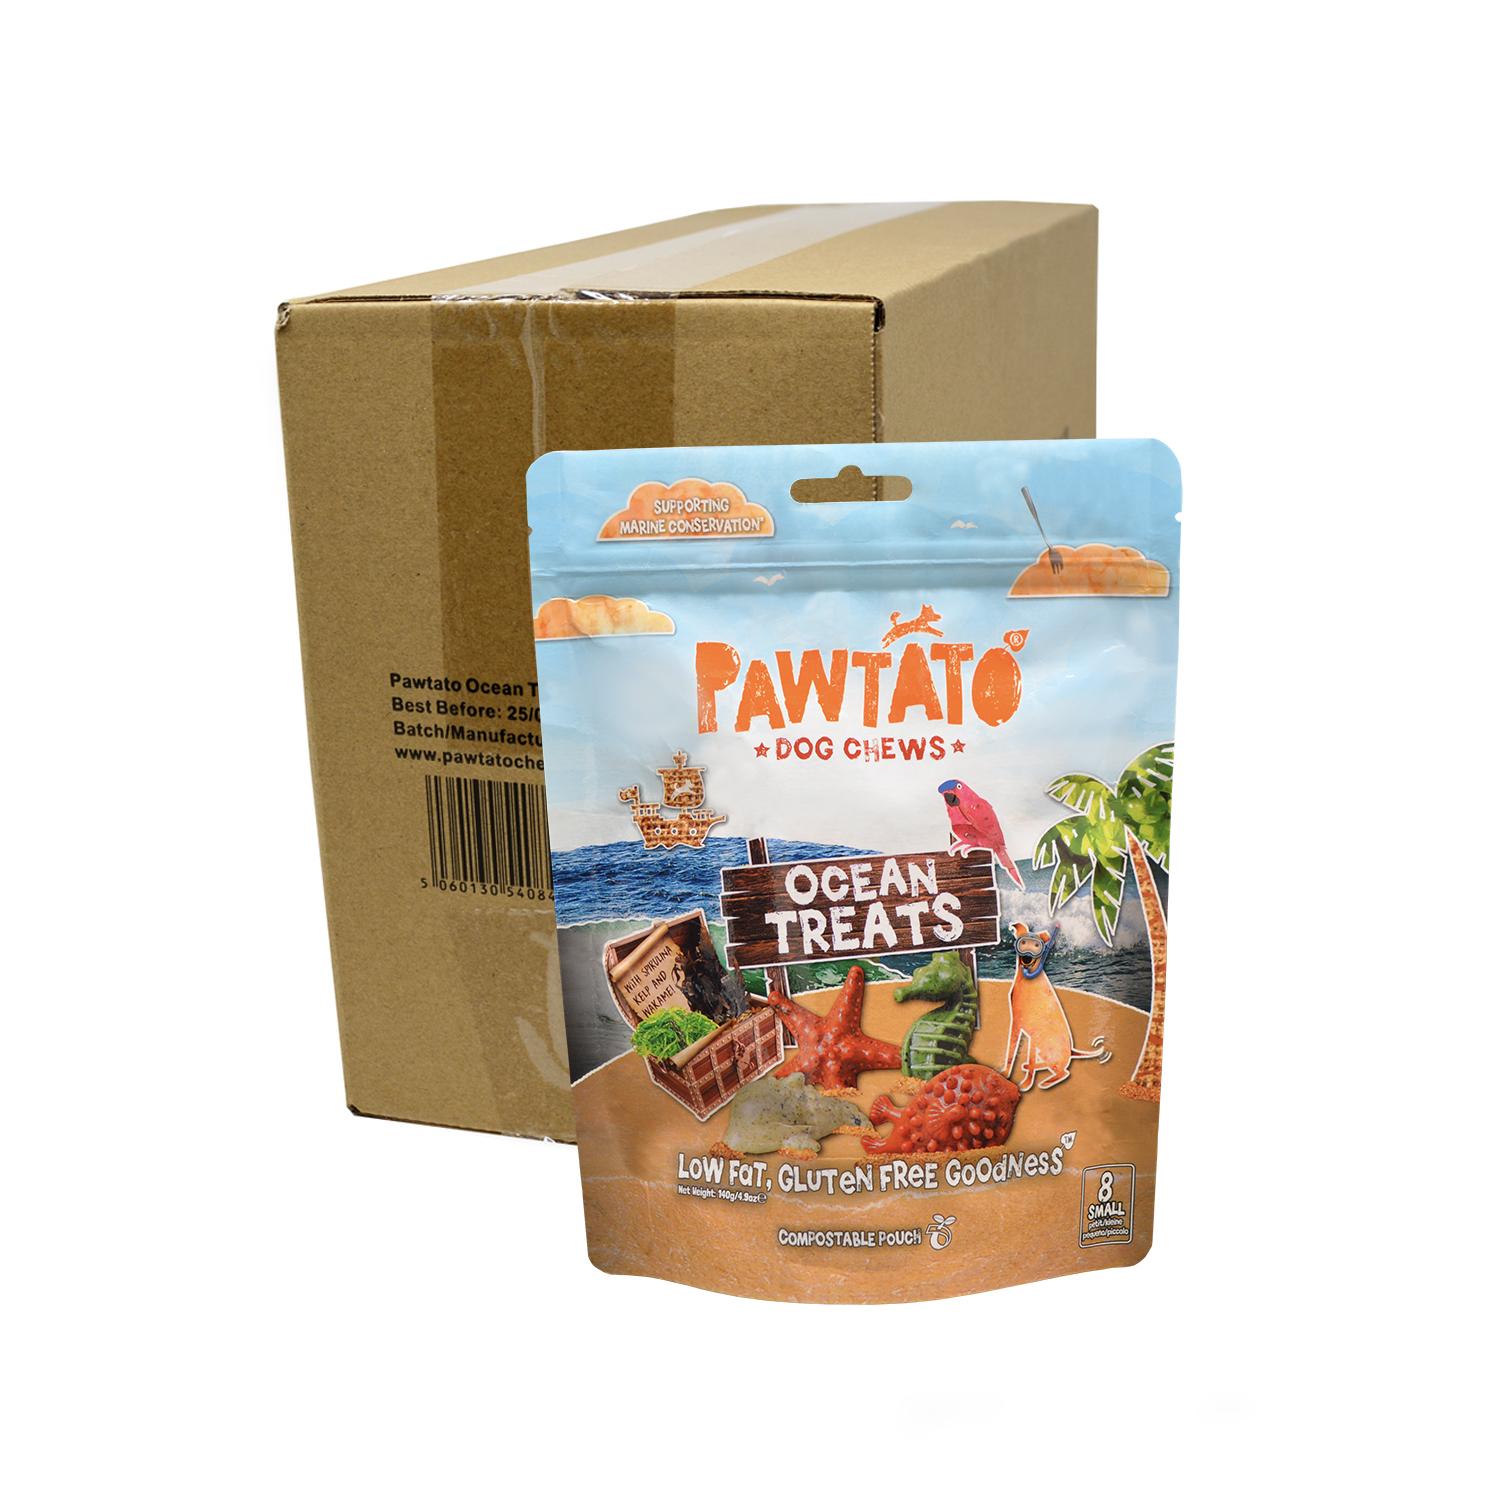 A bulk case of Pawtato Small Grain Free Ocean Treats Vegan Dog Chews